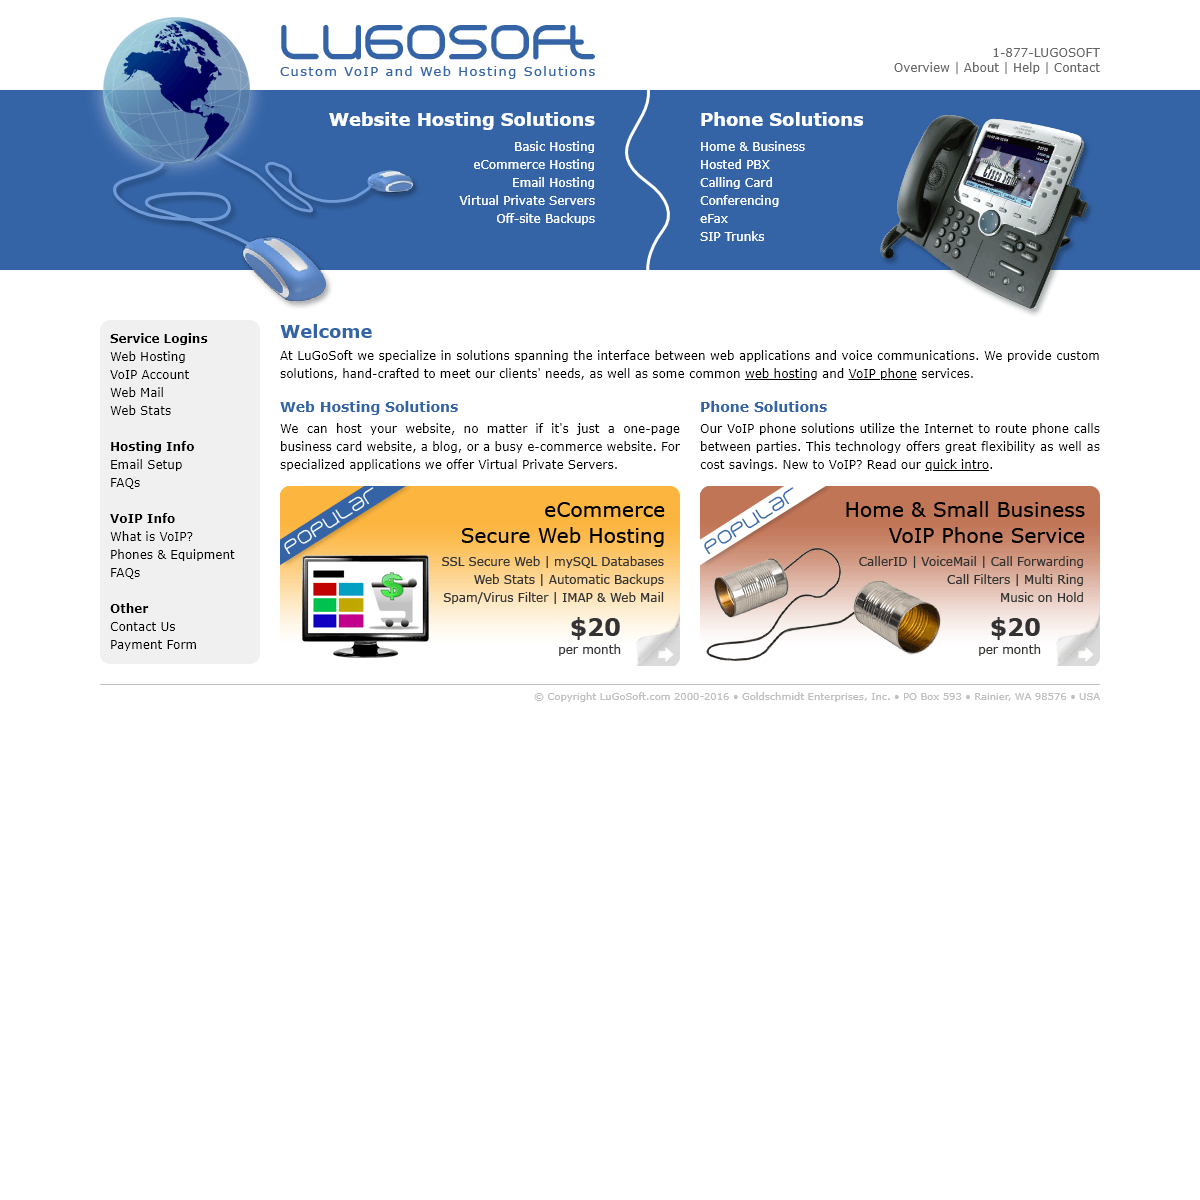 A complete backup of lugosoft.com